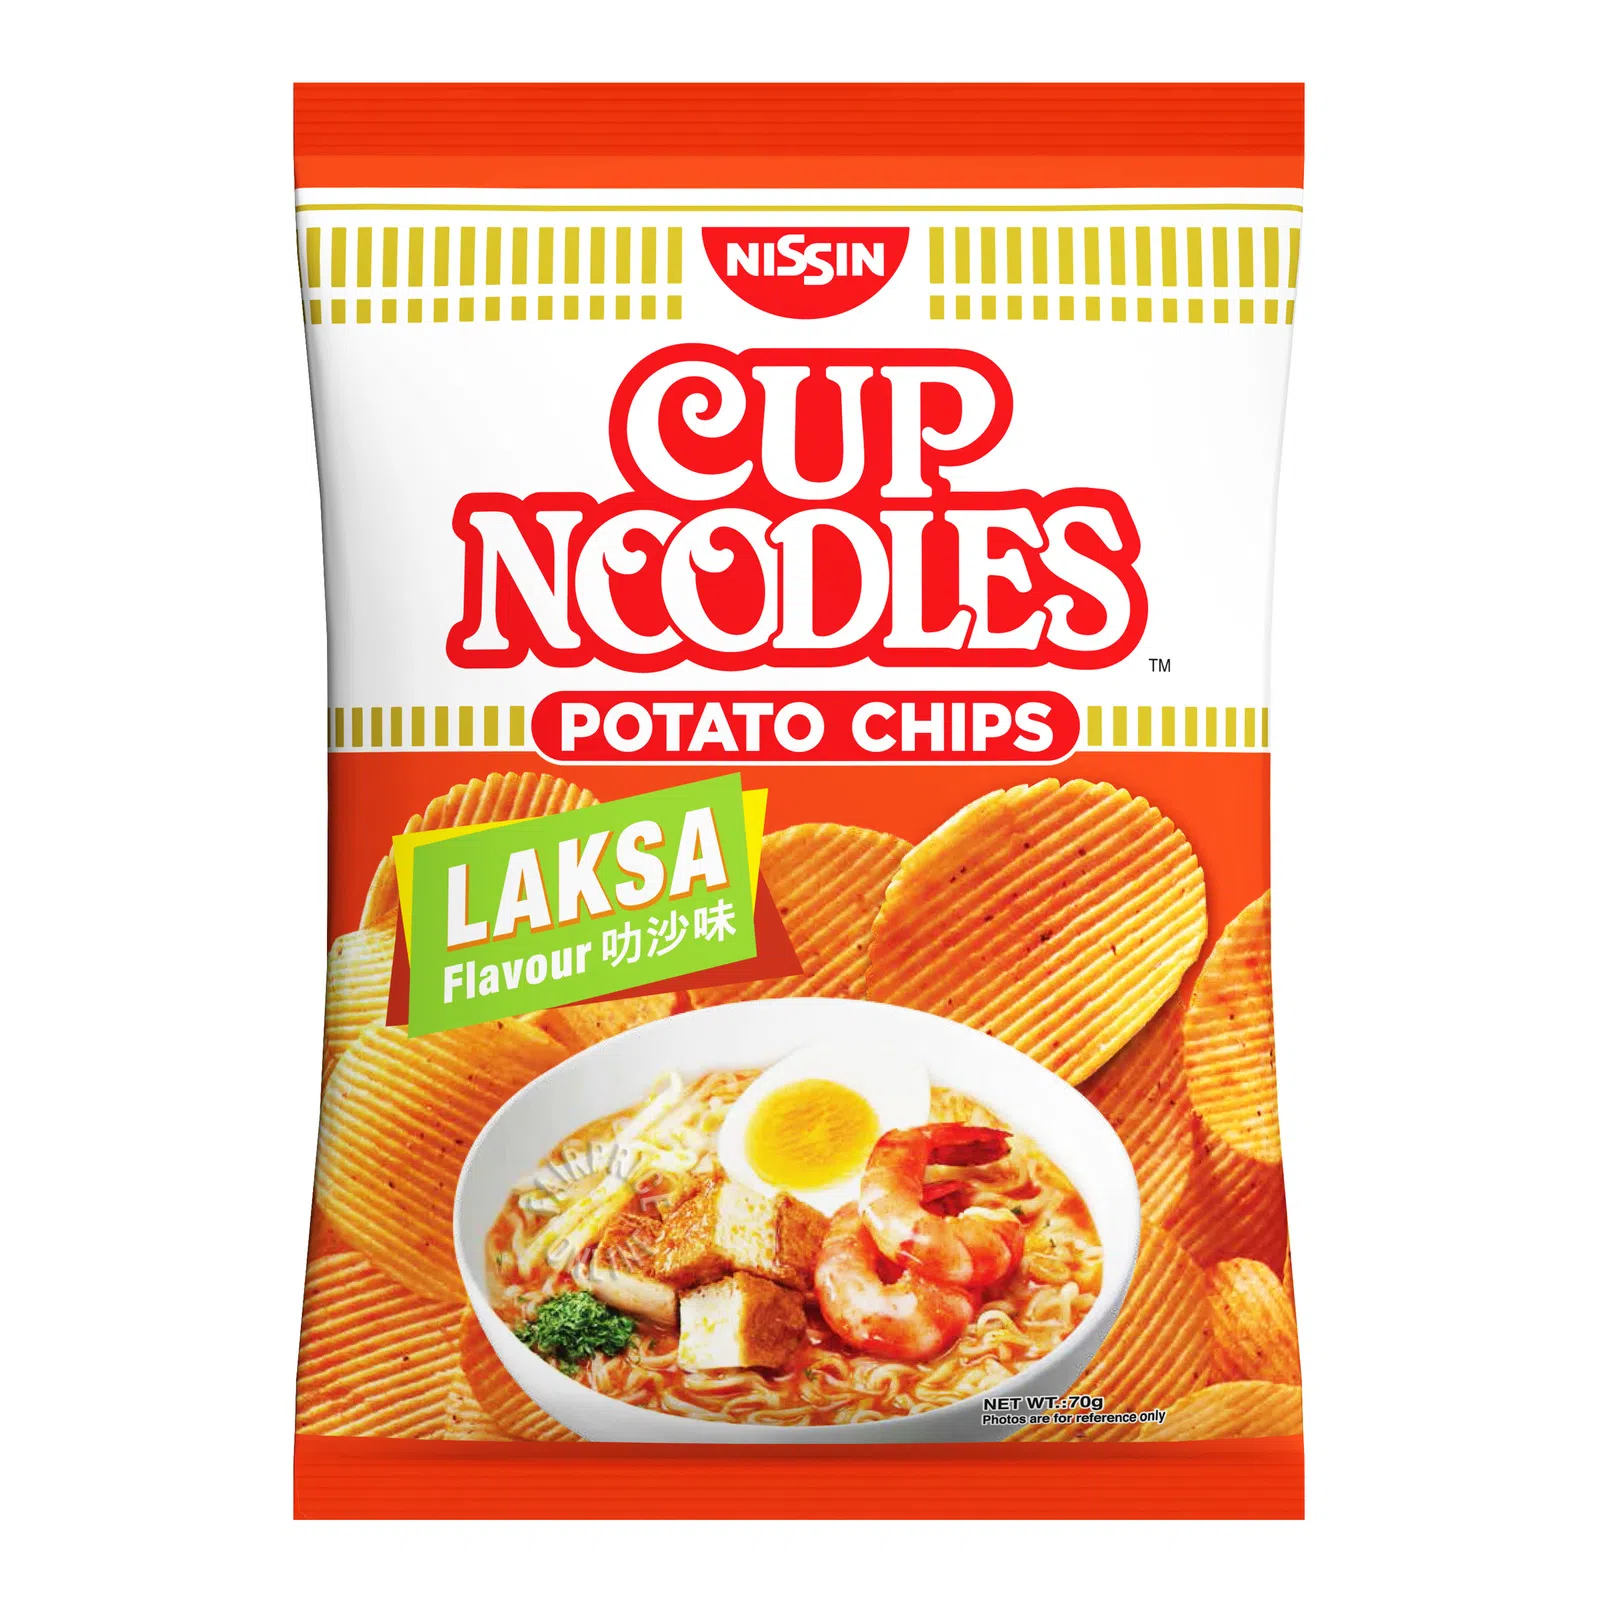 Nissin cup noodles chips